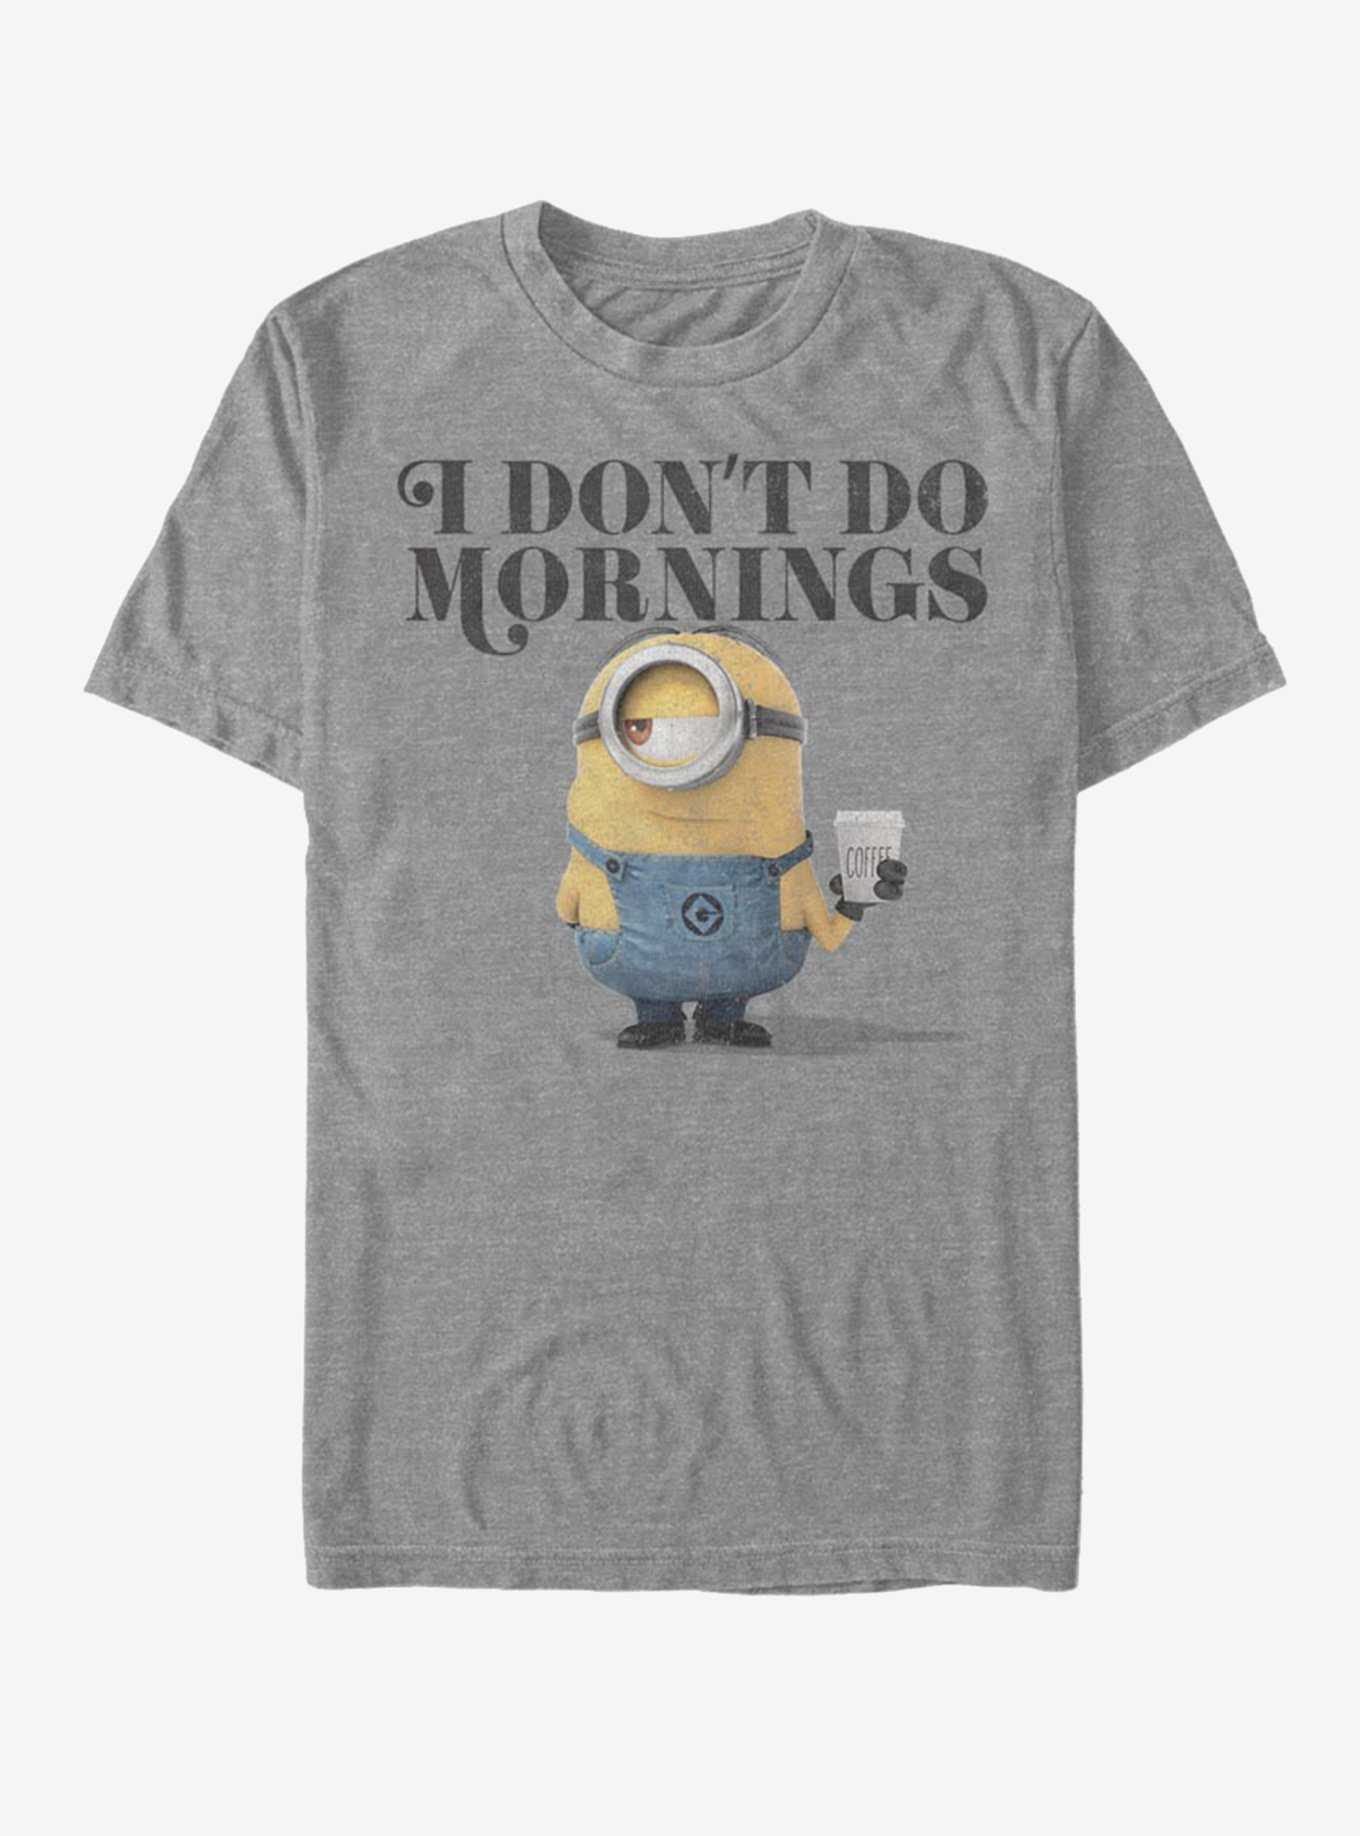 Despicable Me Minions Don't T-Shirt, , hi-res